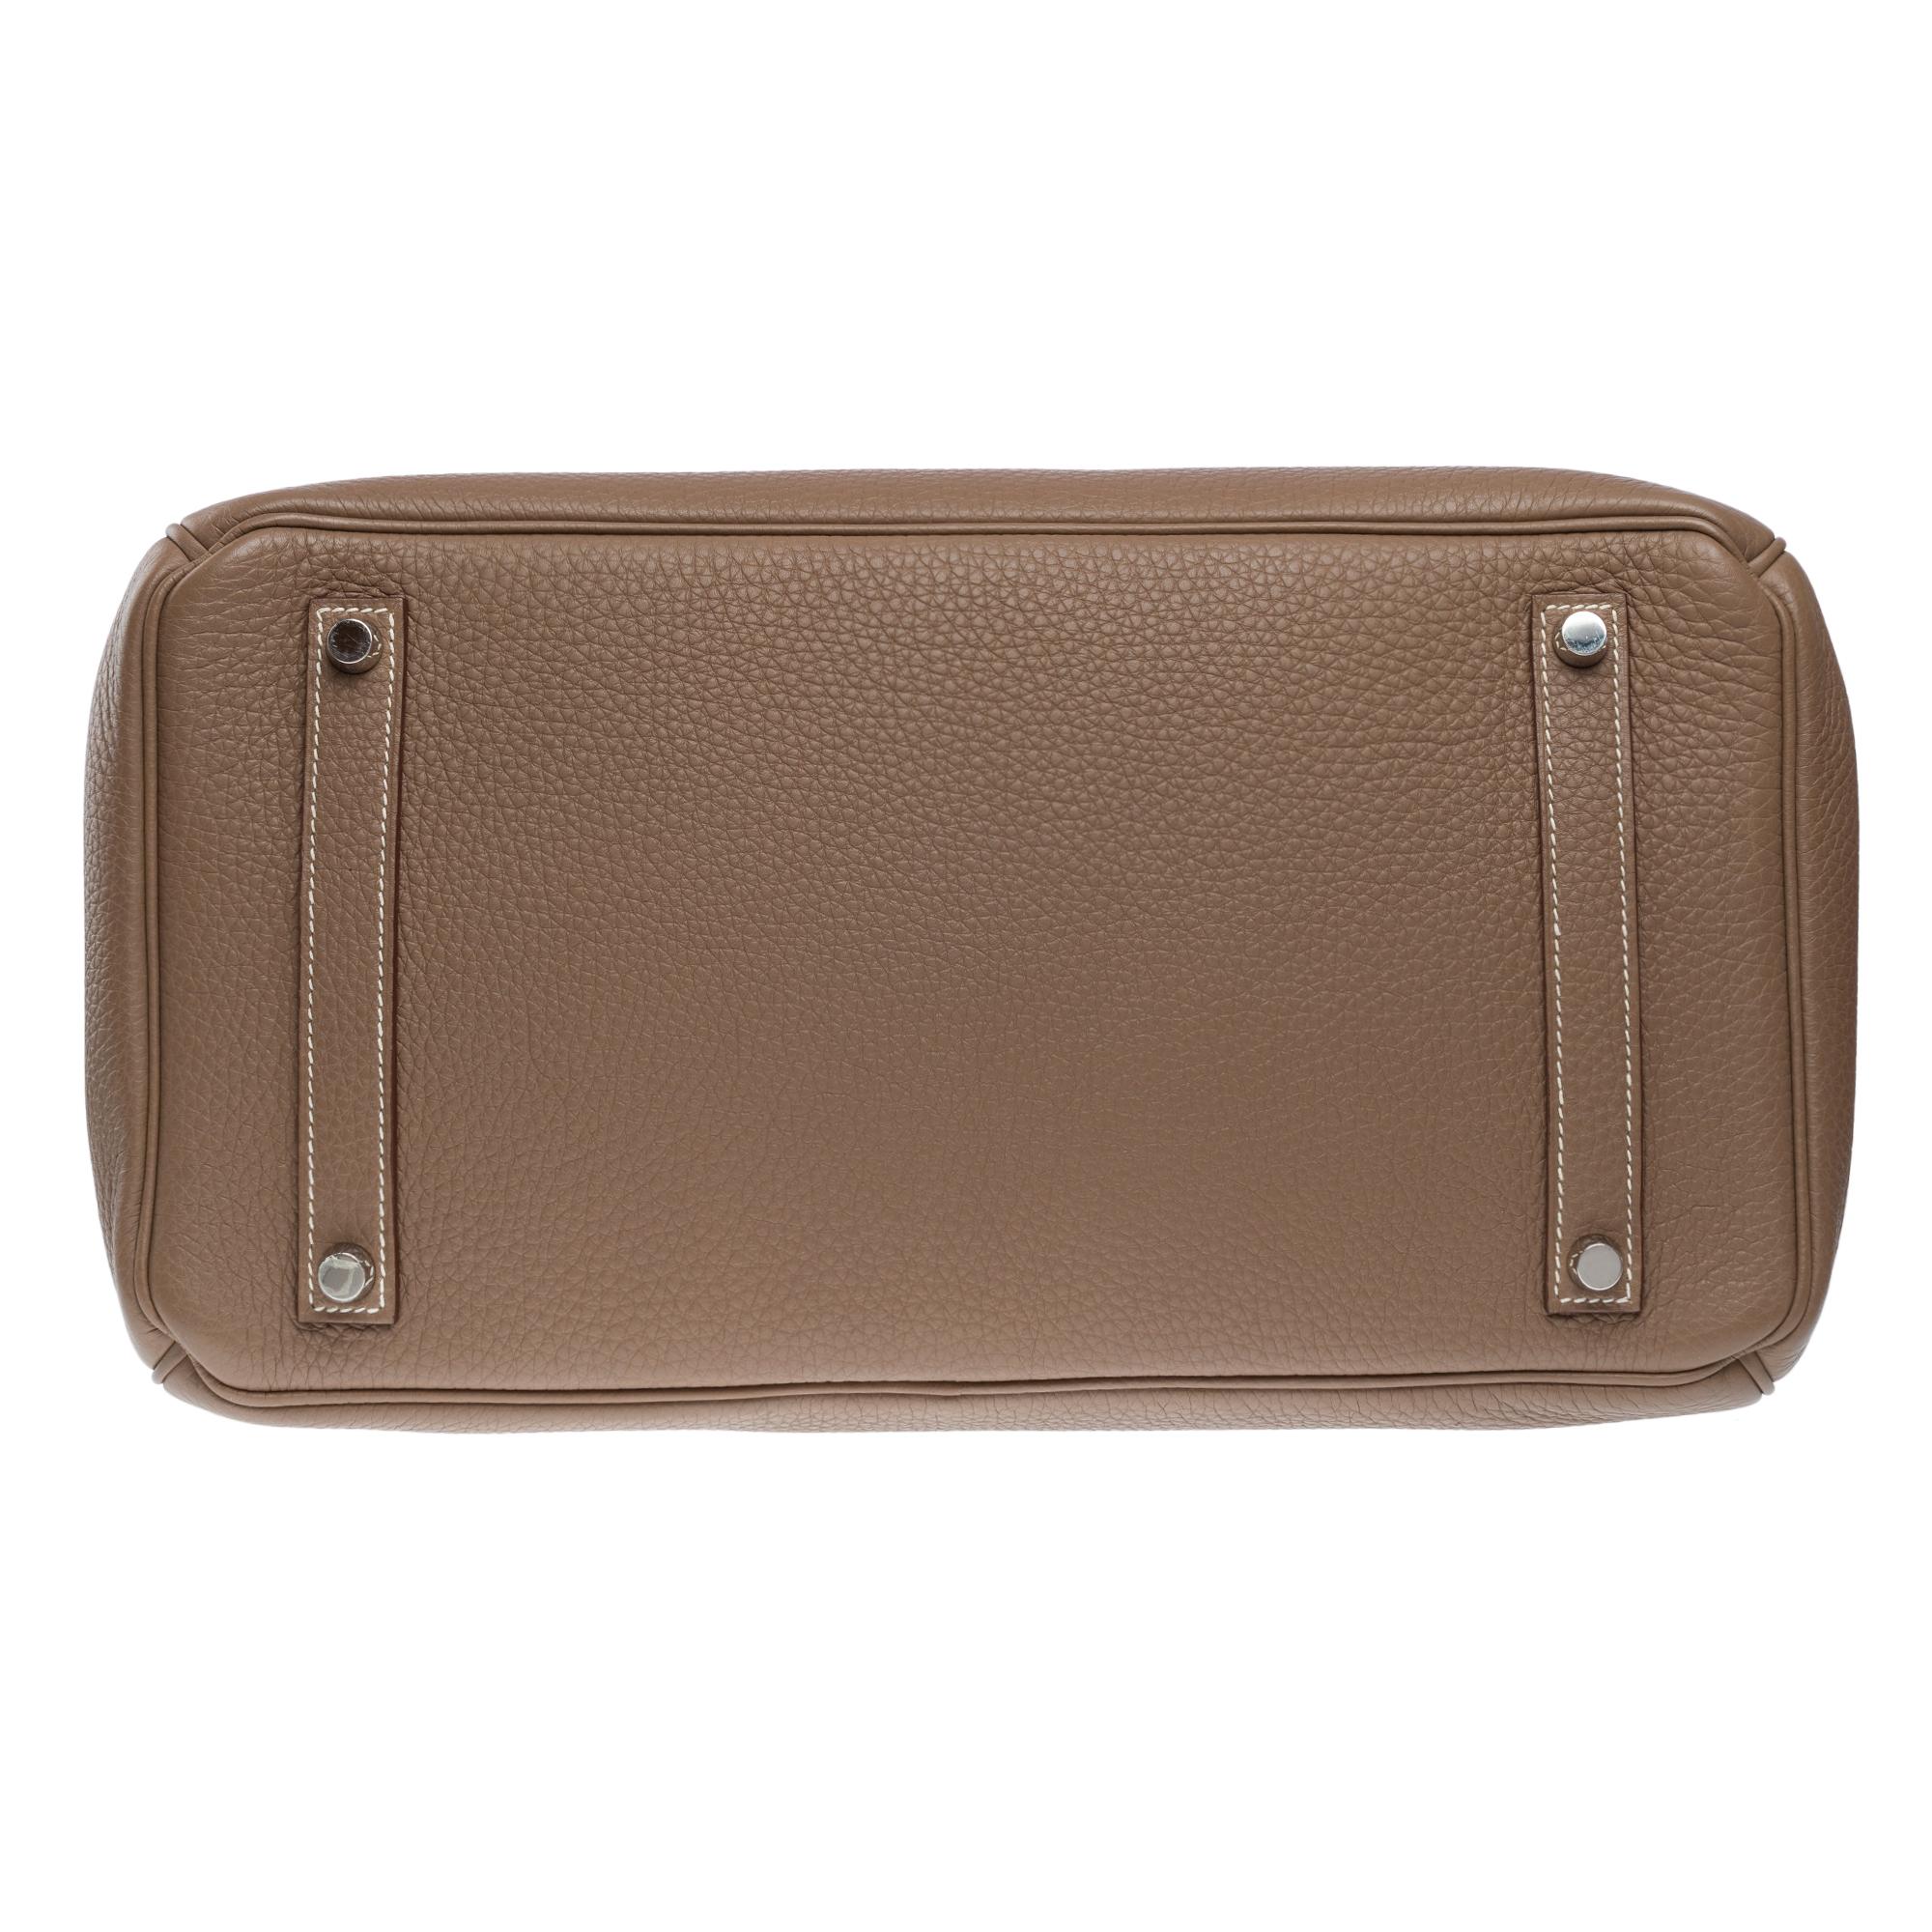 Stunning Hermès Birkin 35 handbag in etoupe Togo leather, SHW 8